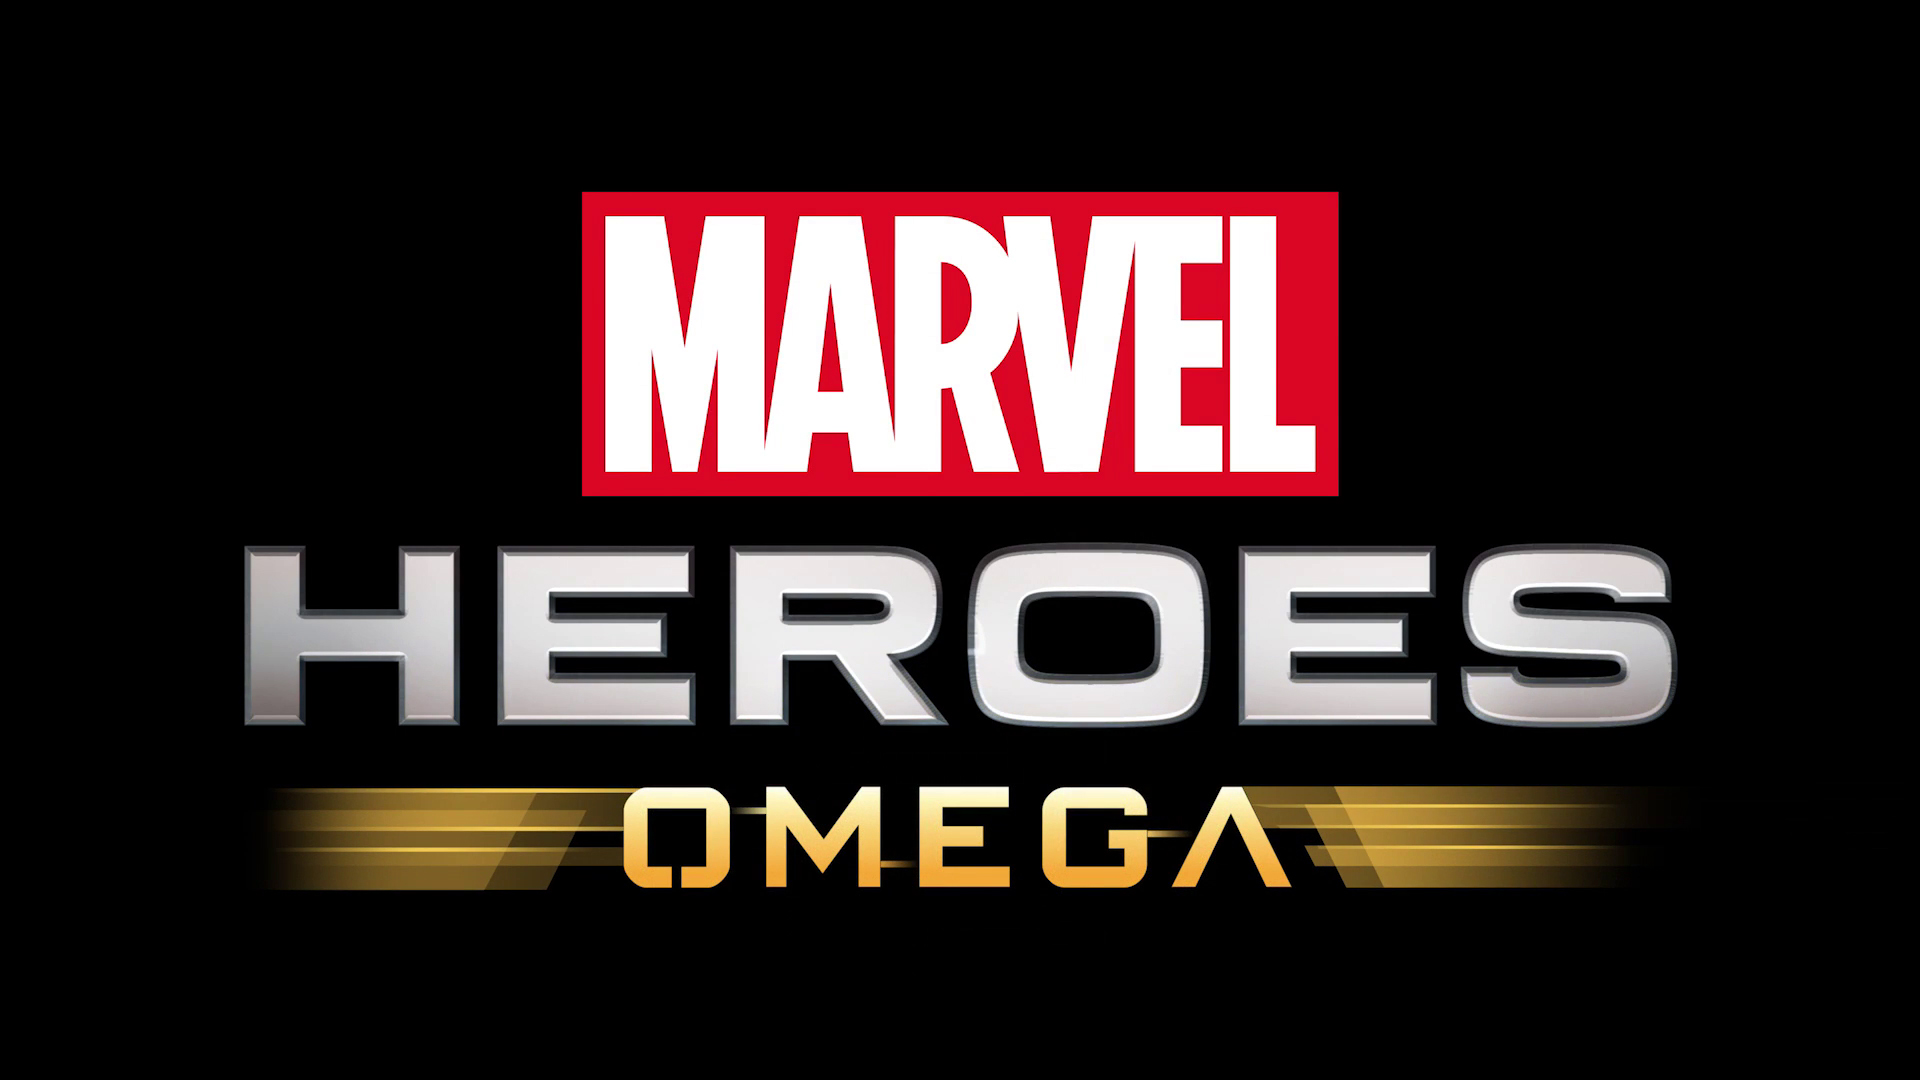 marvel heroes omega download pc 2018